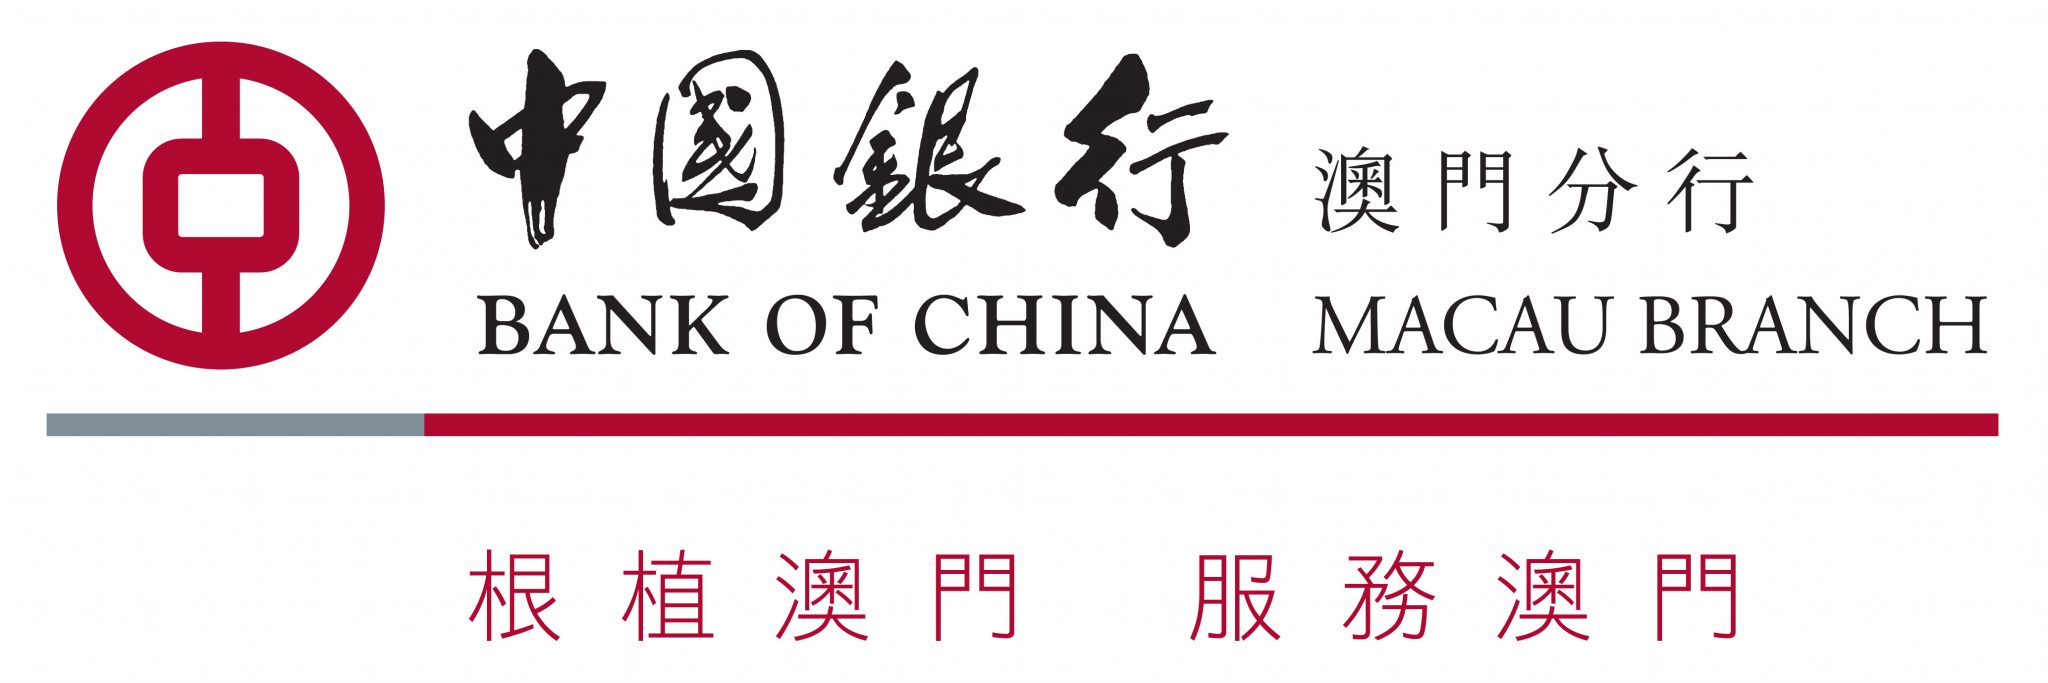 Сайт банка китая. Китайские логотипы банков. Банк Bank of China. Банк оф Чайна логотип. Народный банк Китая логотип.